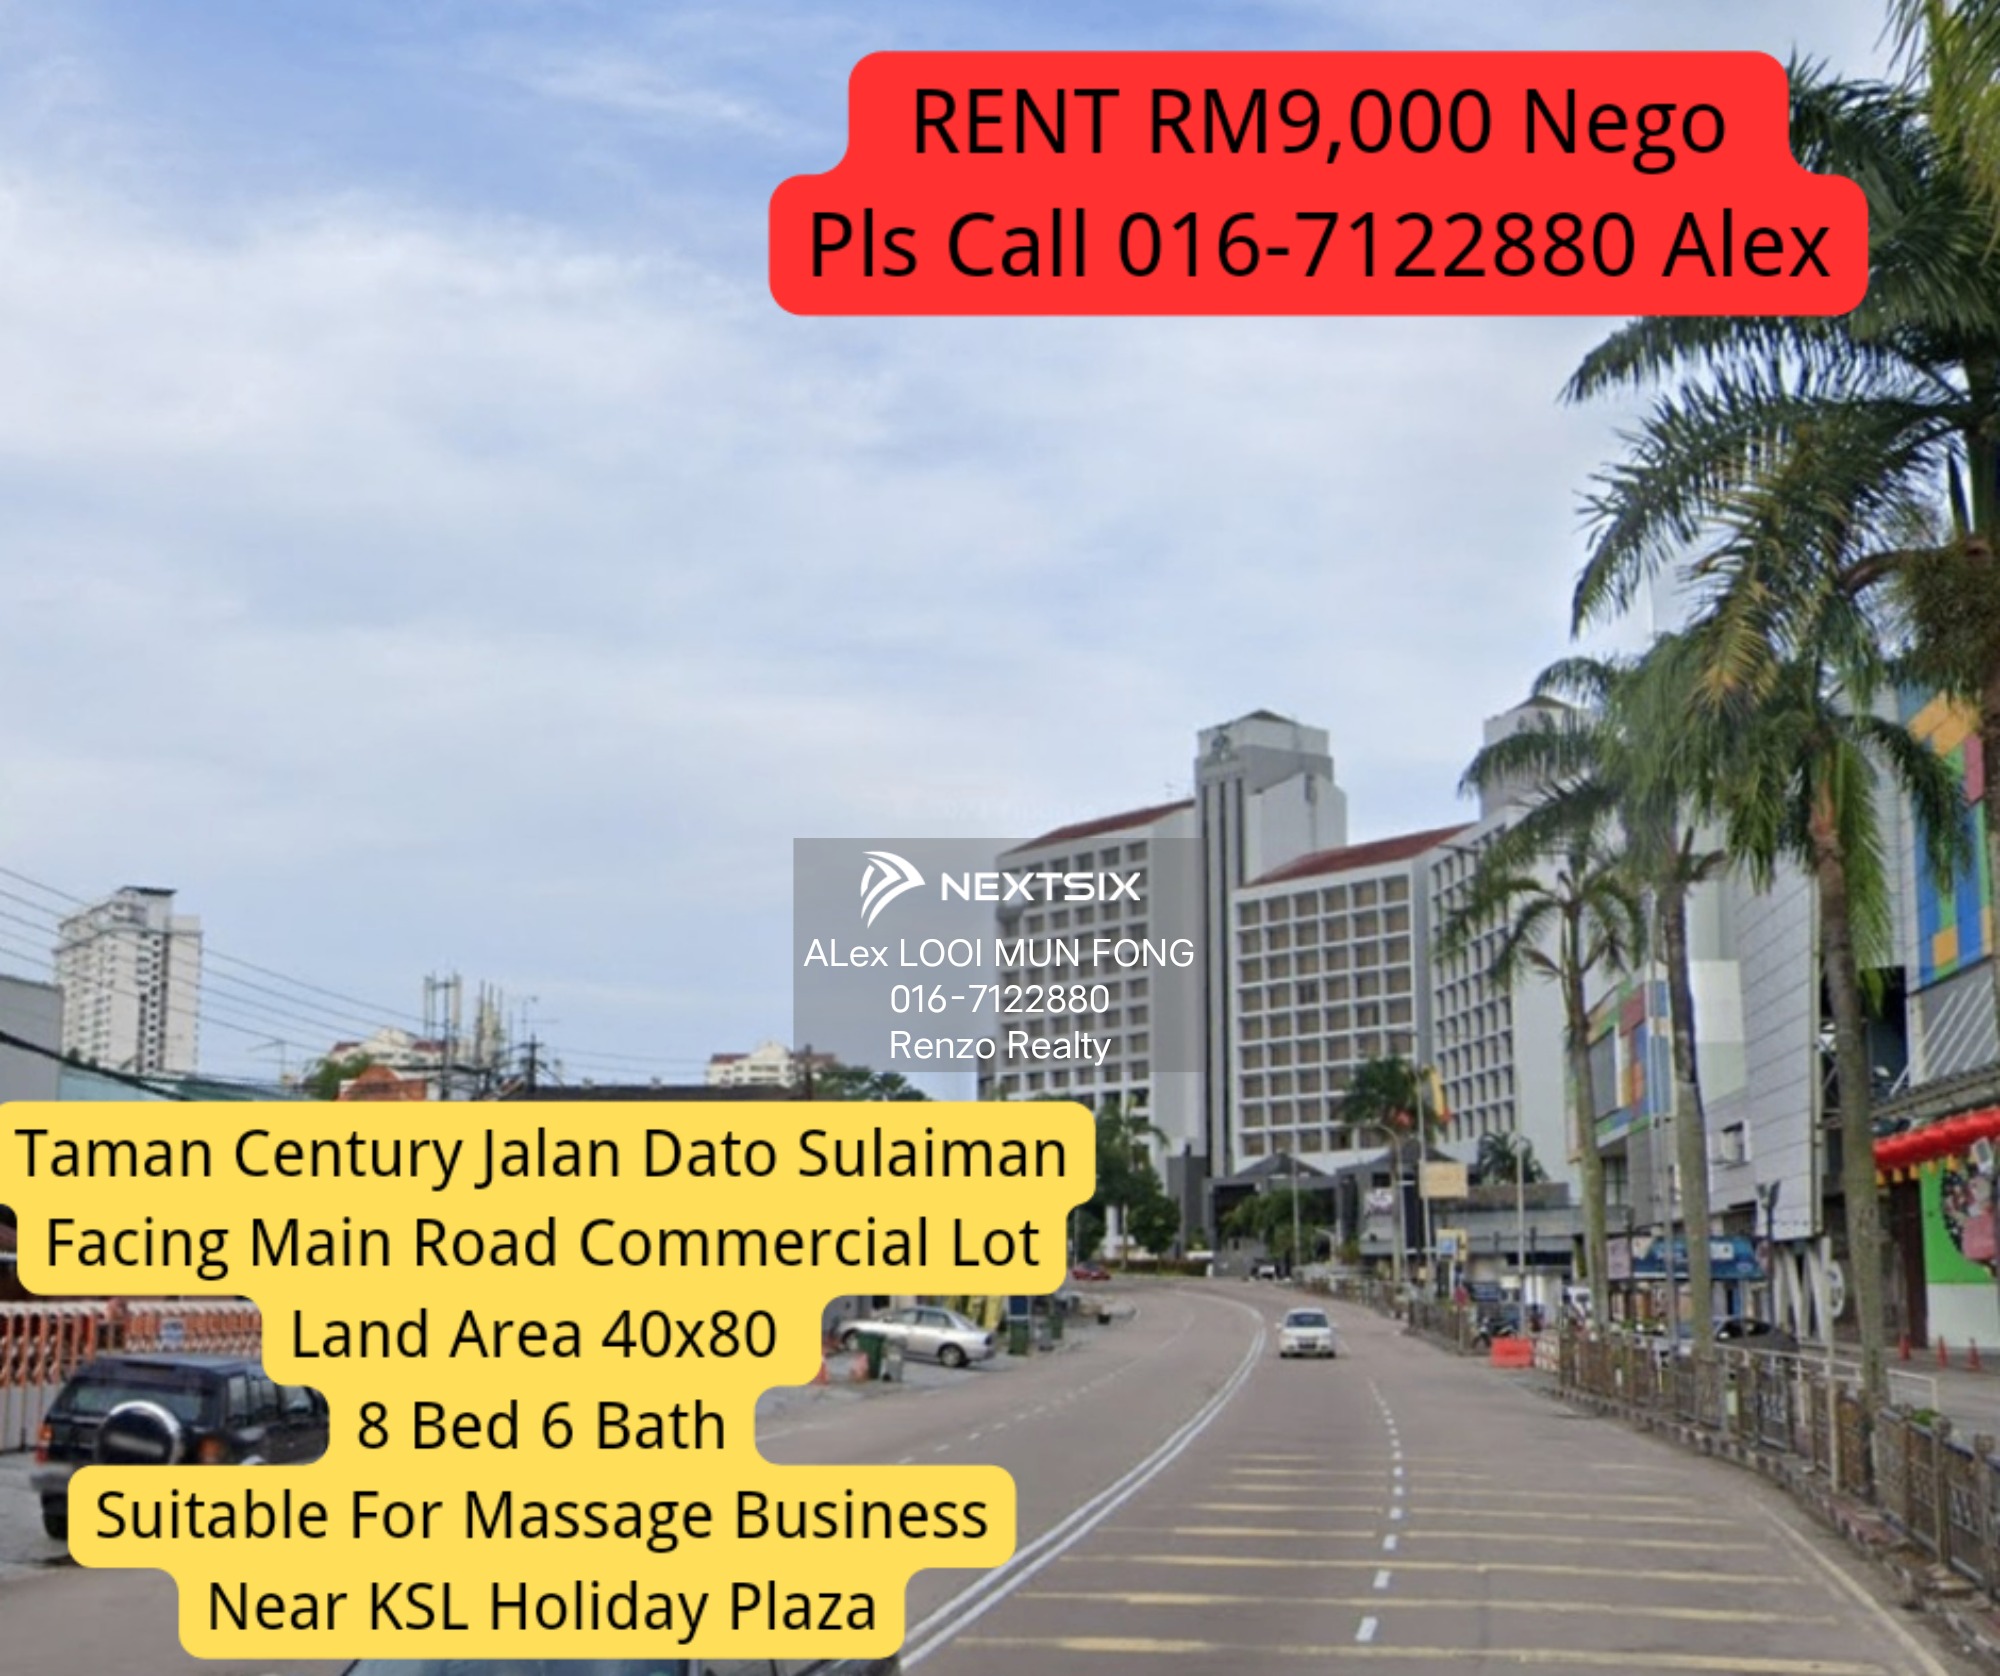 Taman Century Jalan Dato Sulaiman 1 Storey Commercial Lot For Rent Johor Bahru